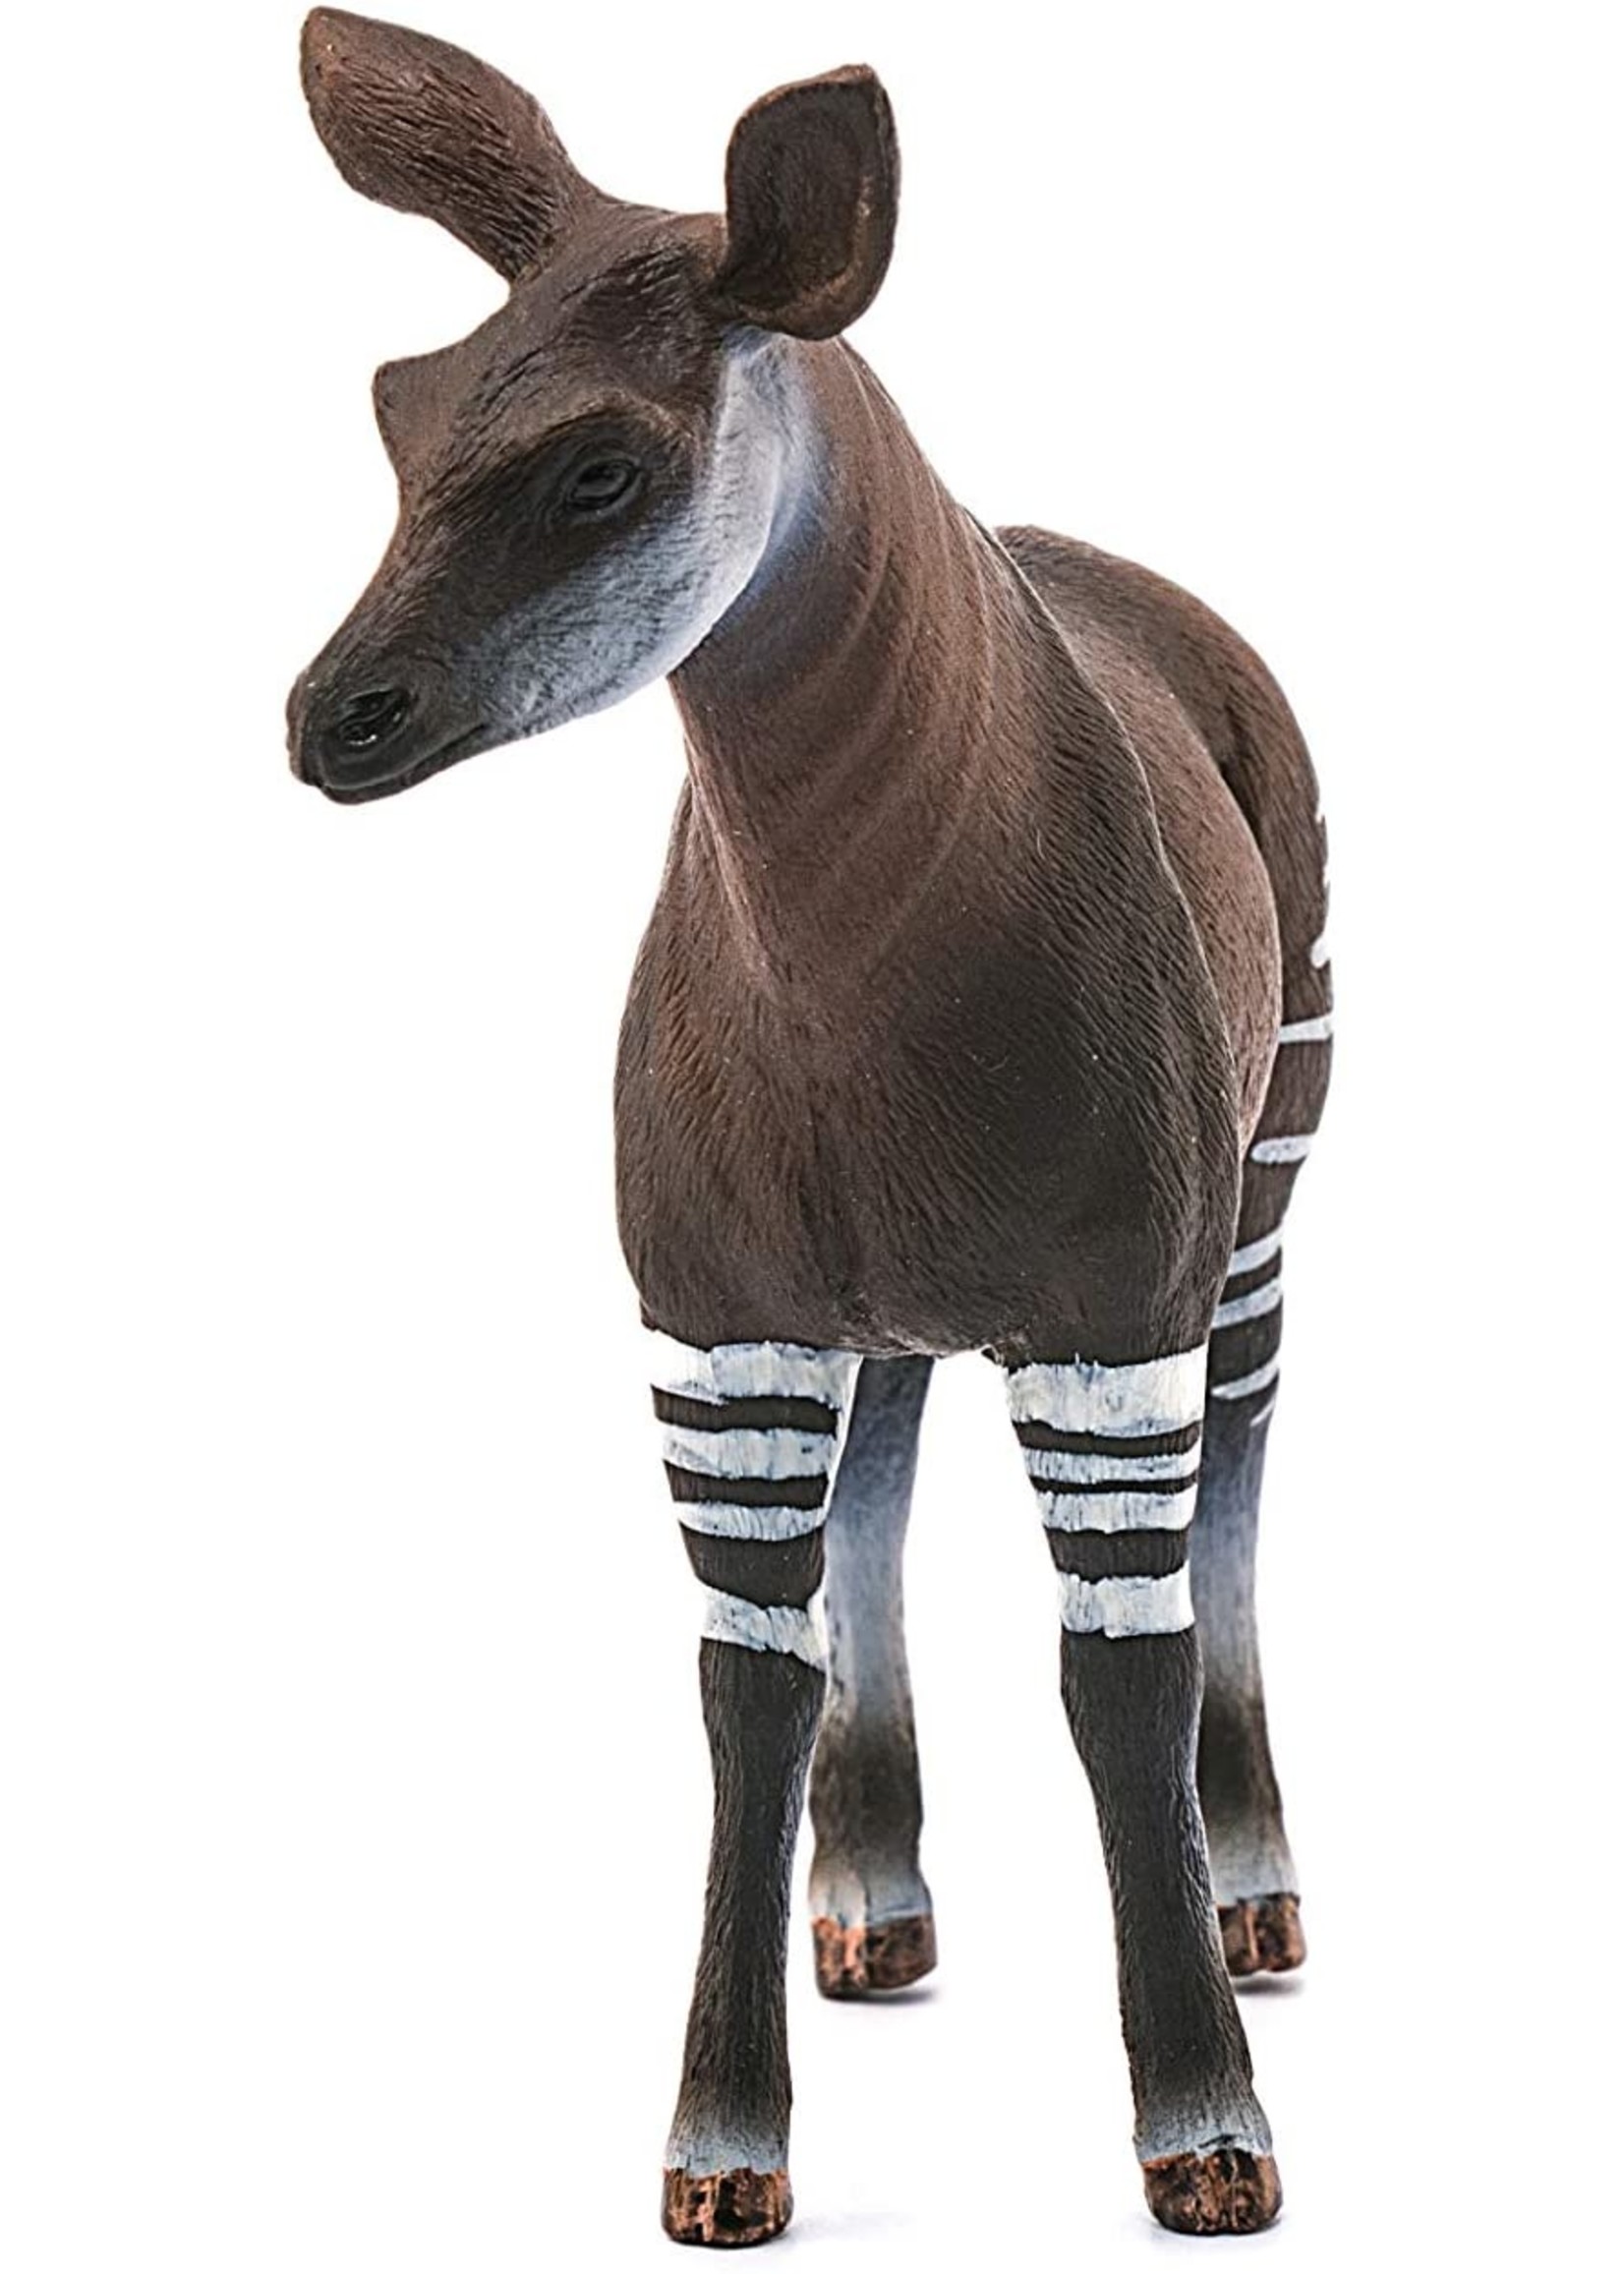 Schleich 14830 - Okapi